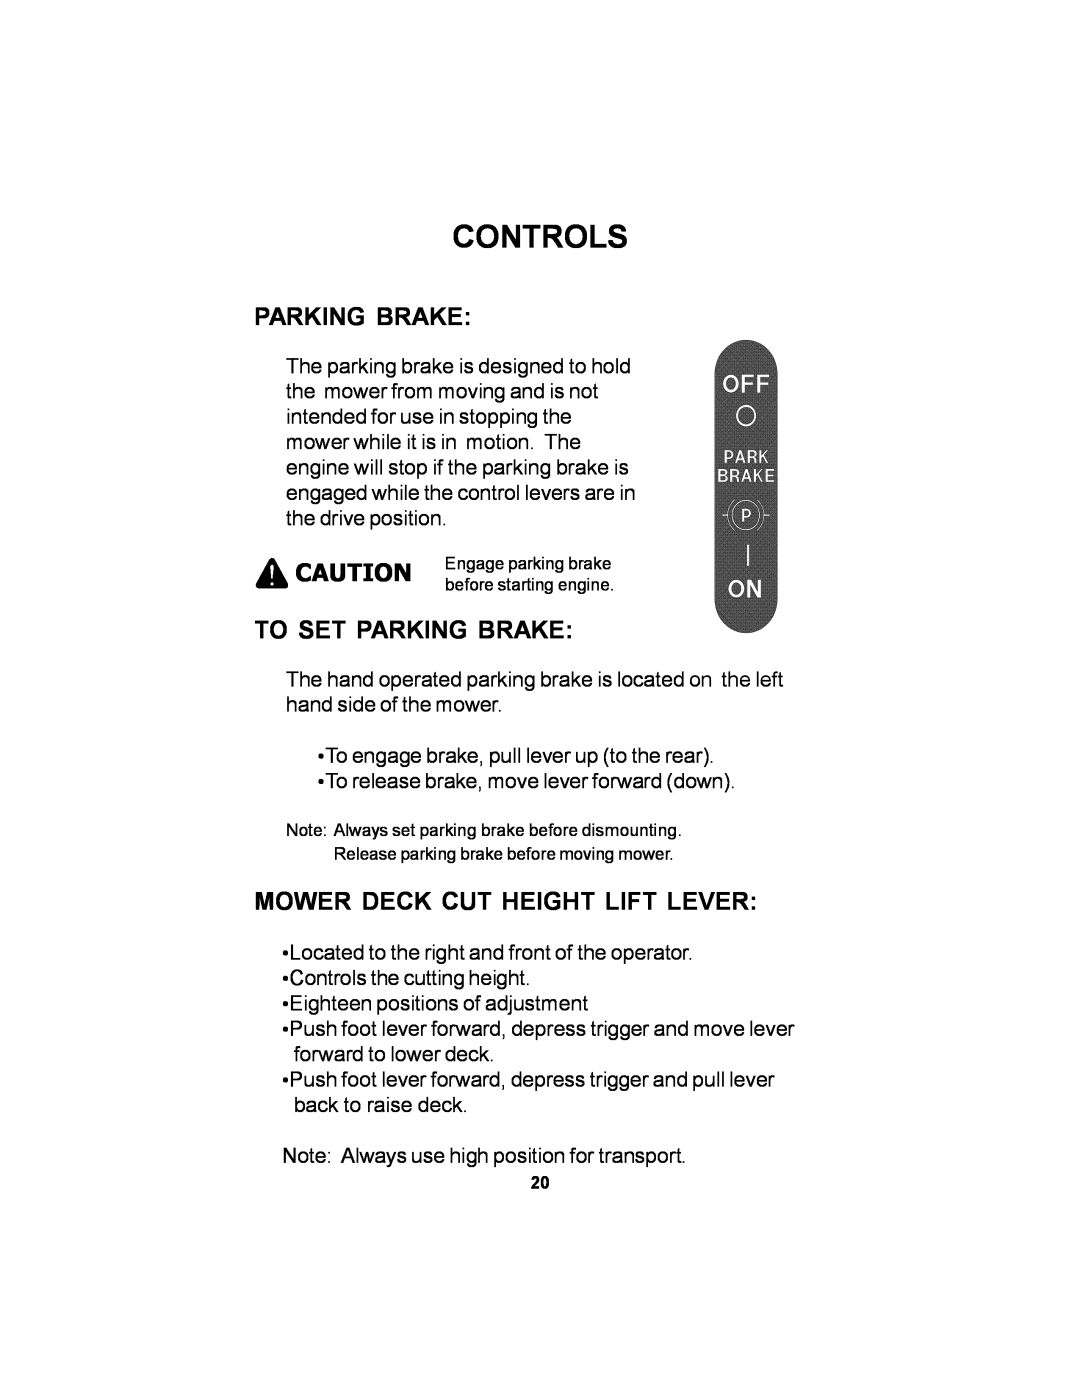 Dixon 18626-106 manual To Set Parking Brake, Mower Deck Cut Height Lift Lever, Controls 